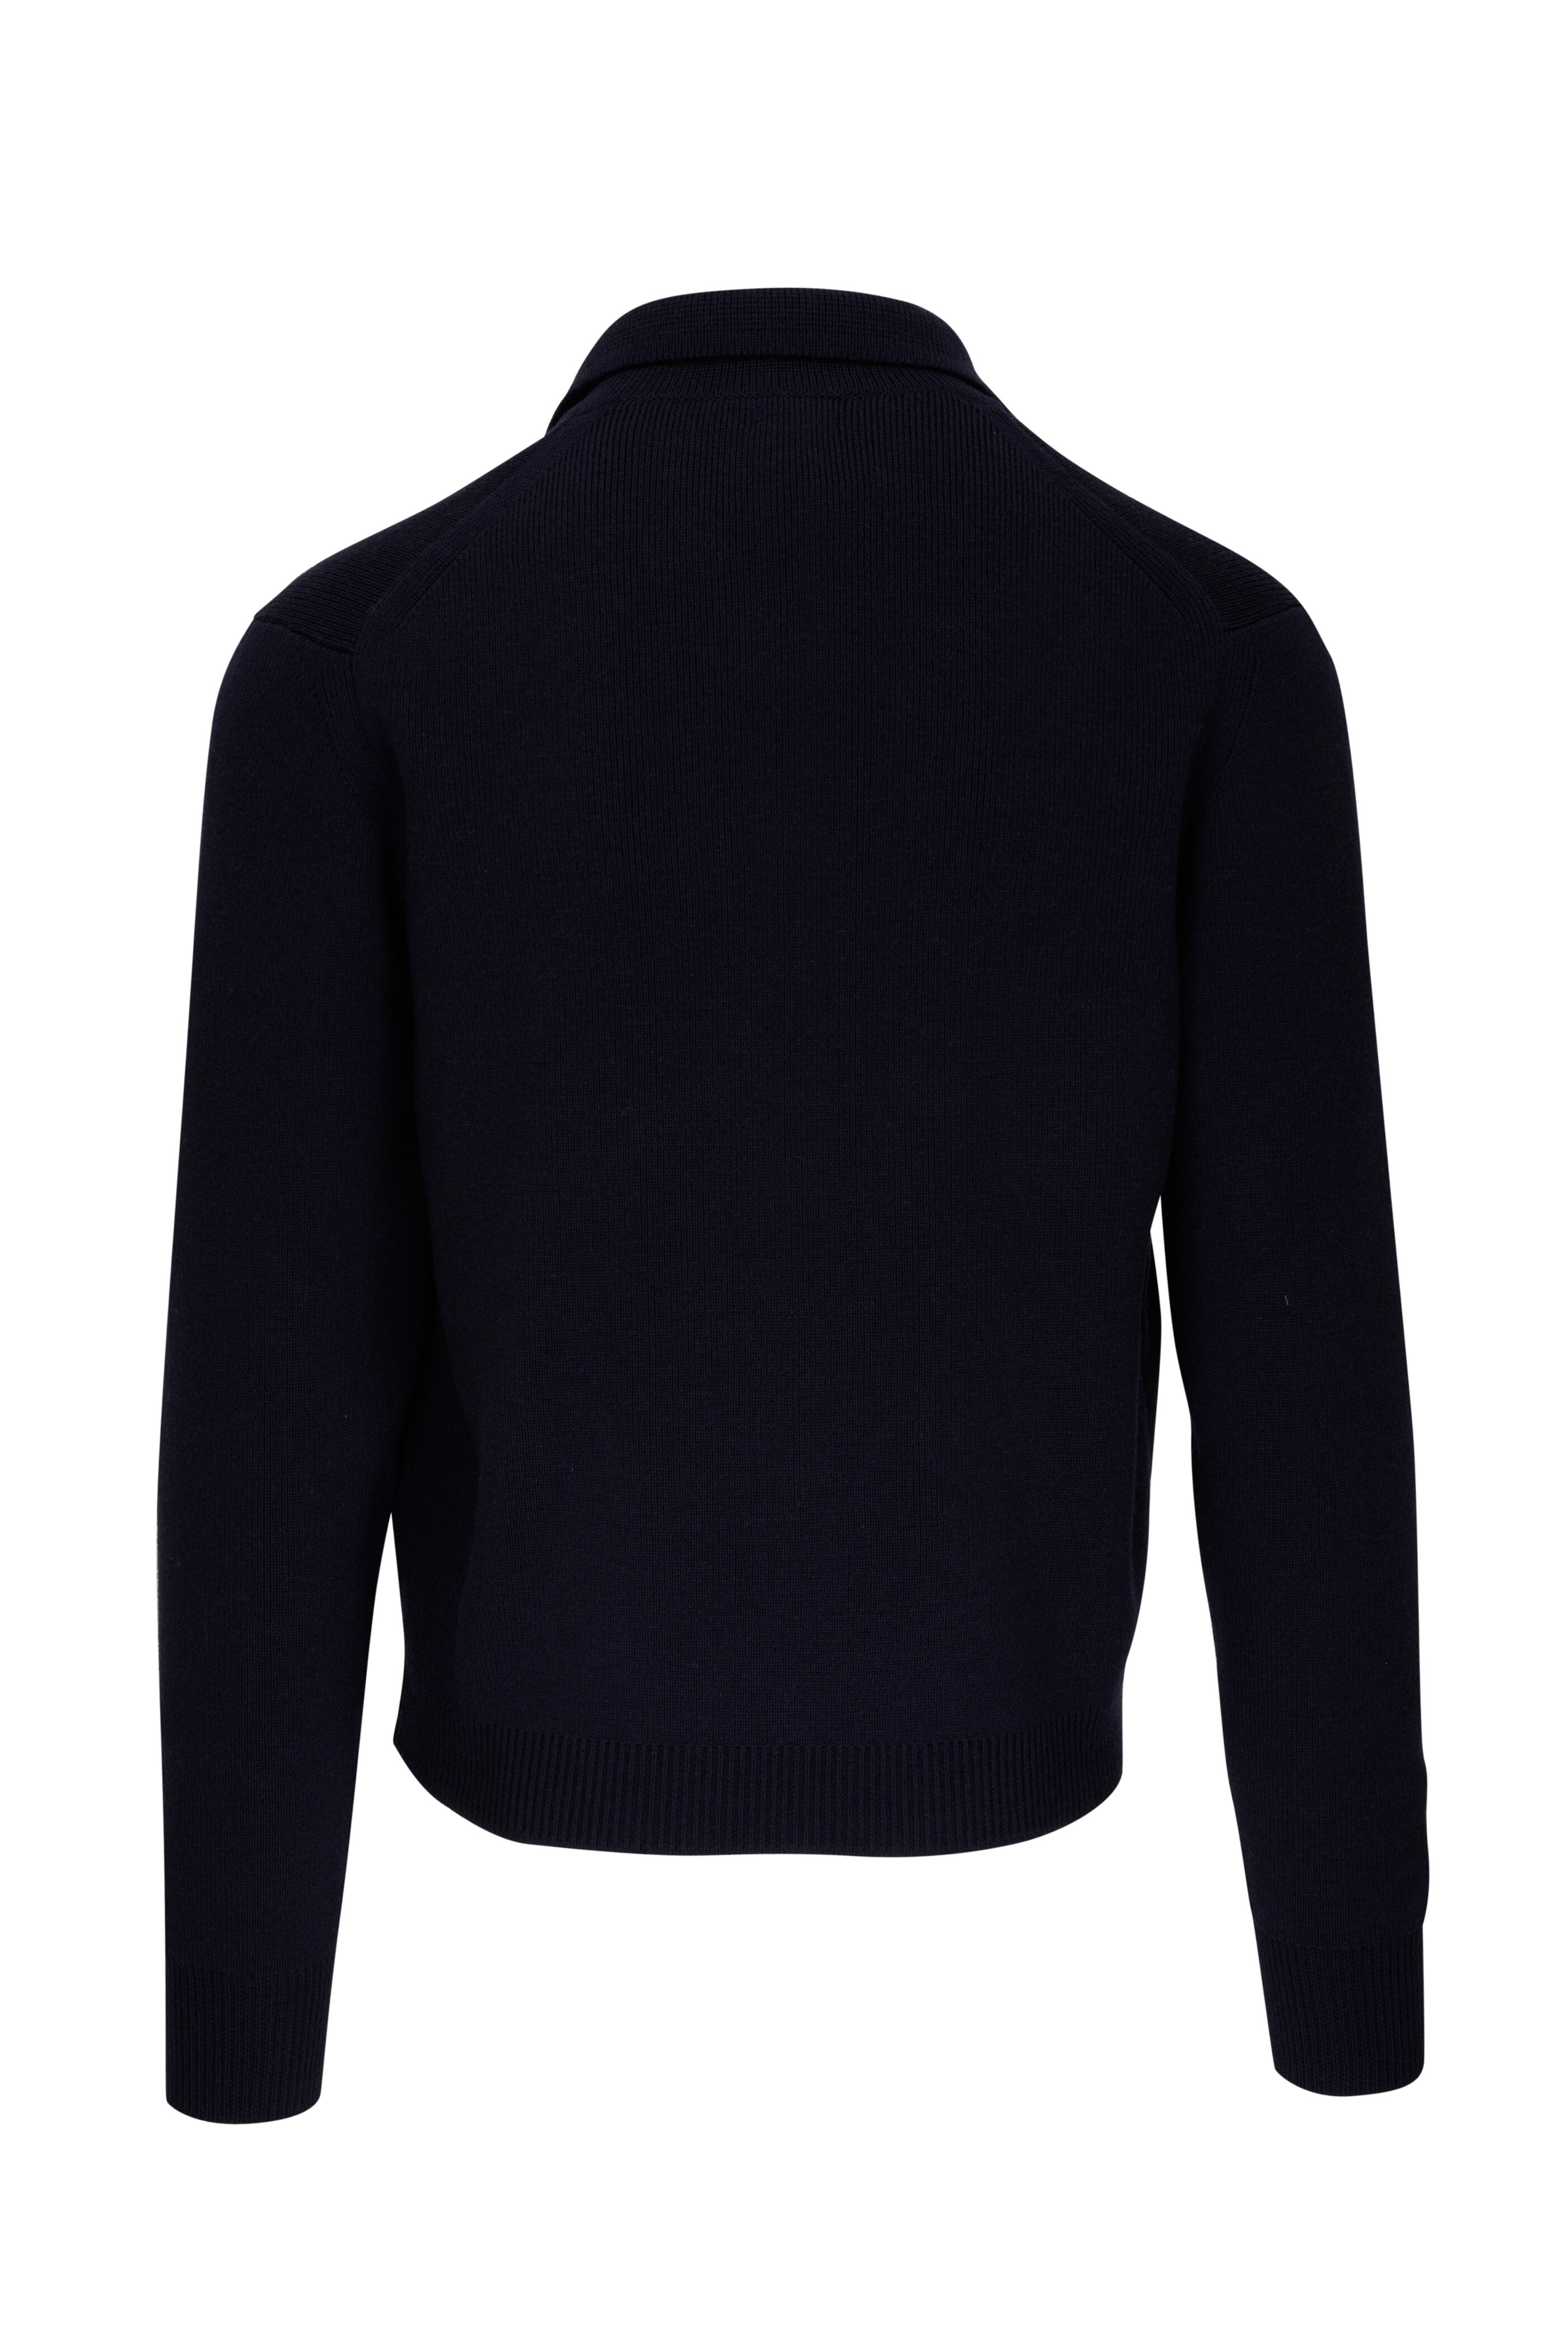 Tom Ford - Navy Merino Wool & Silk Button Front Cardigan